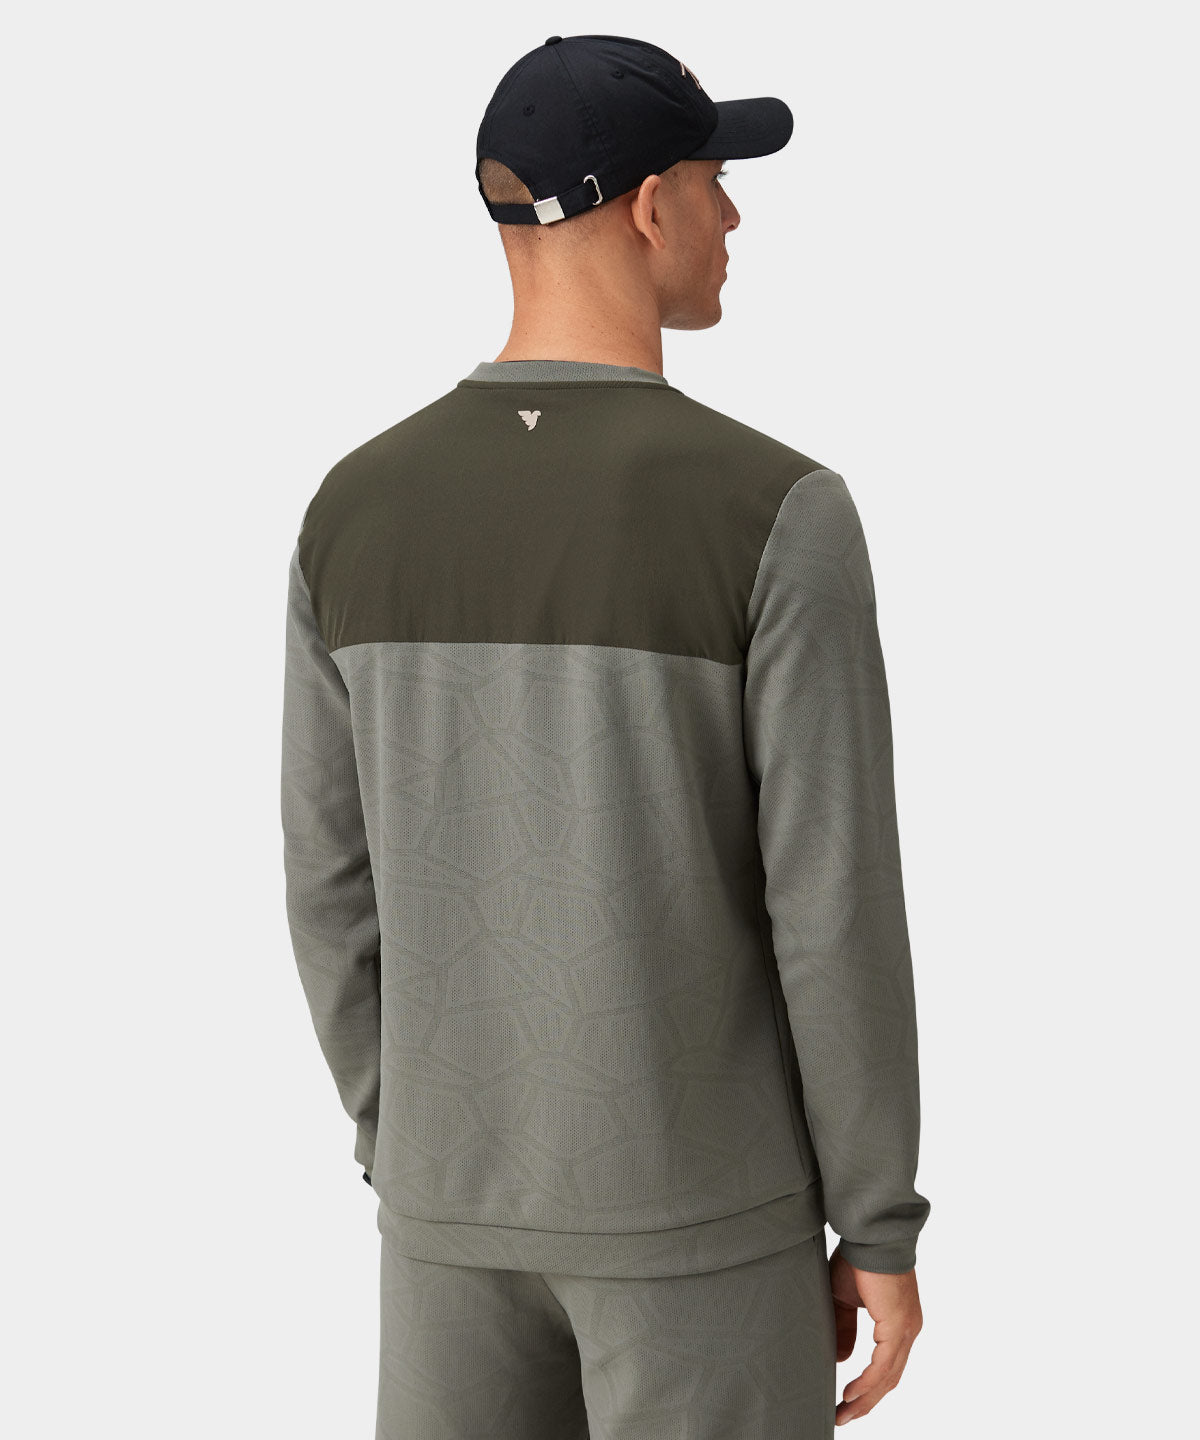 Olive Hybrid Tech Sweatshirt